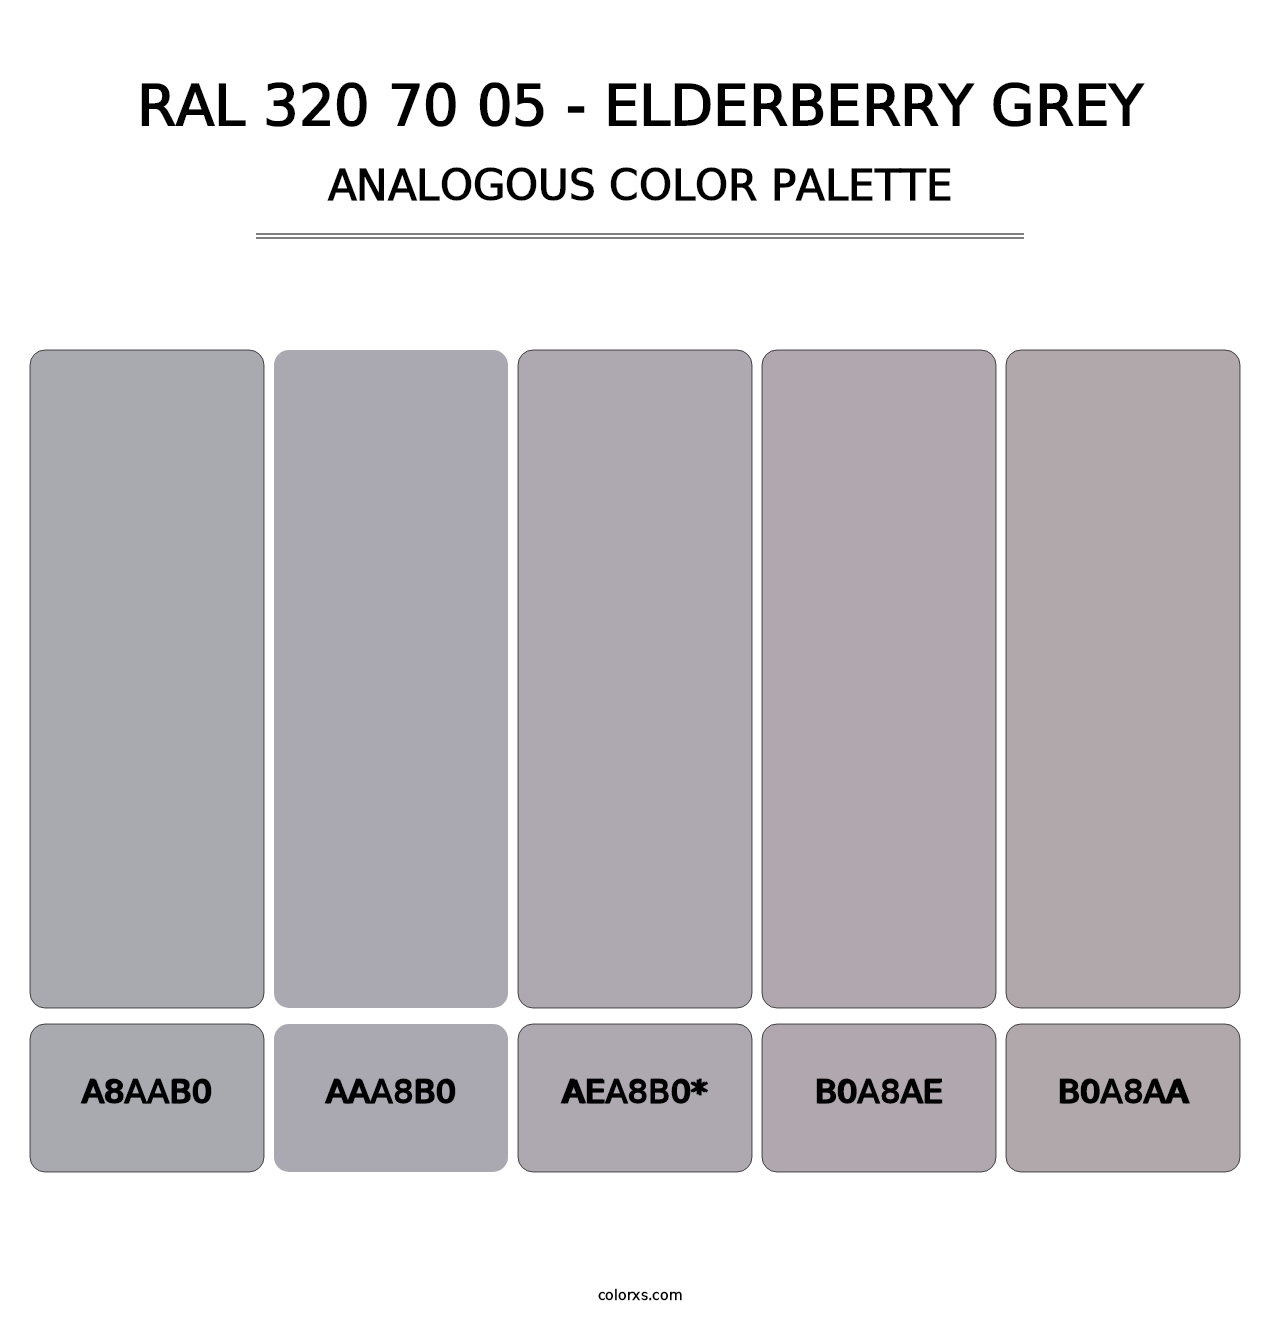 RAL 320 70 05 - Elderberry Grey - Analogous Color Palette